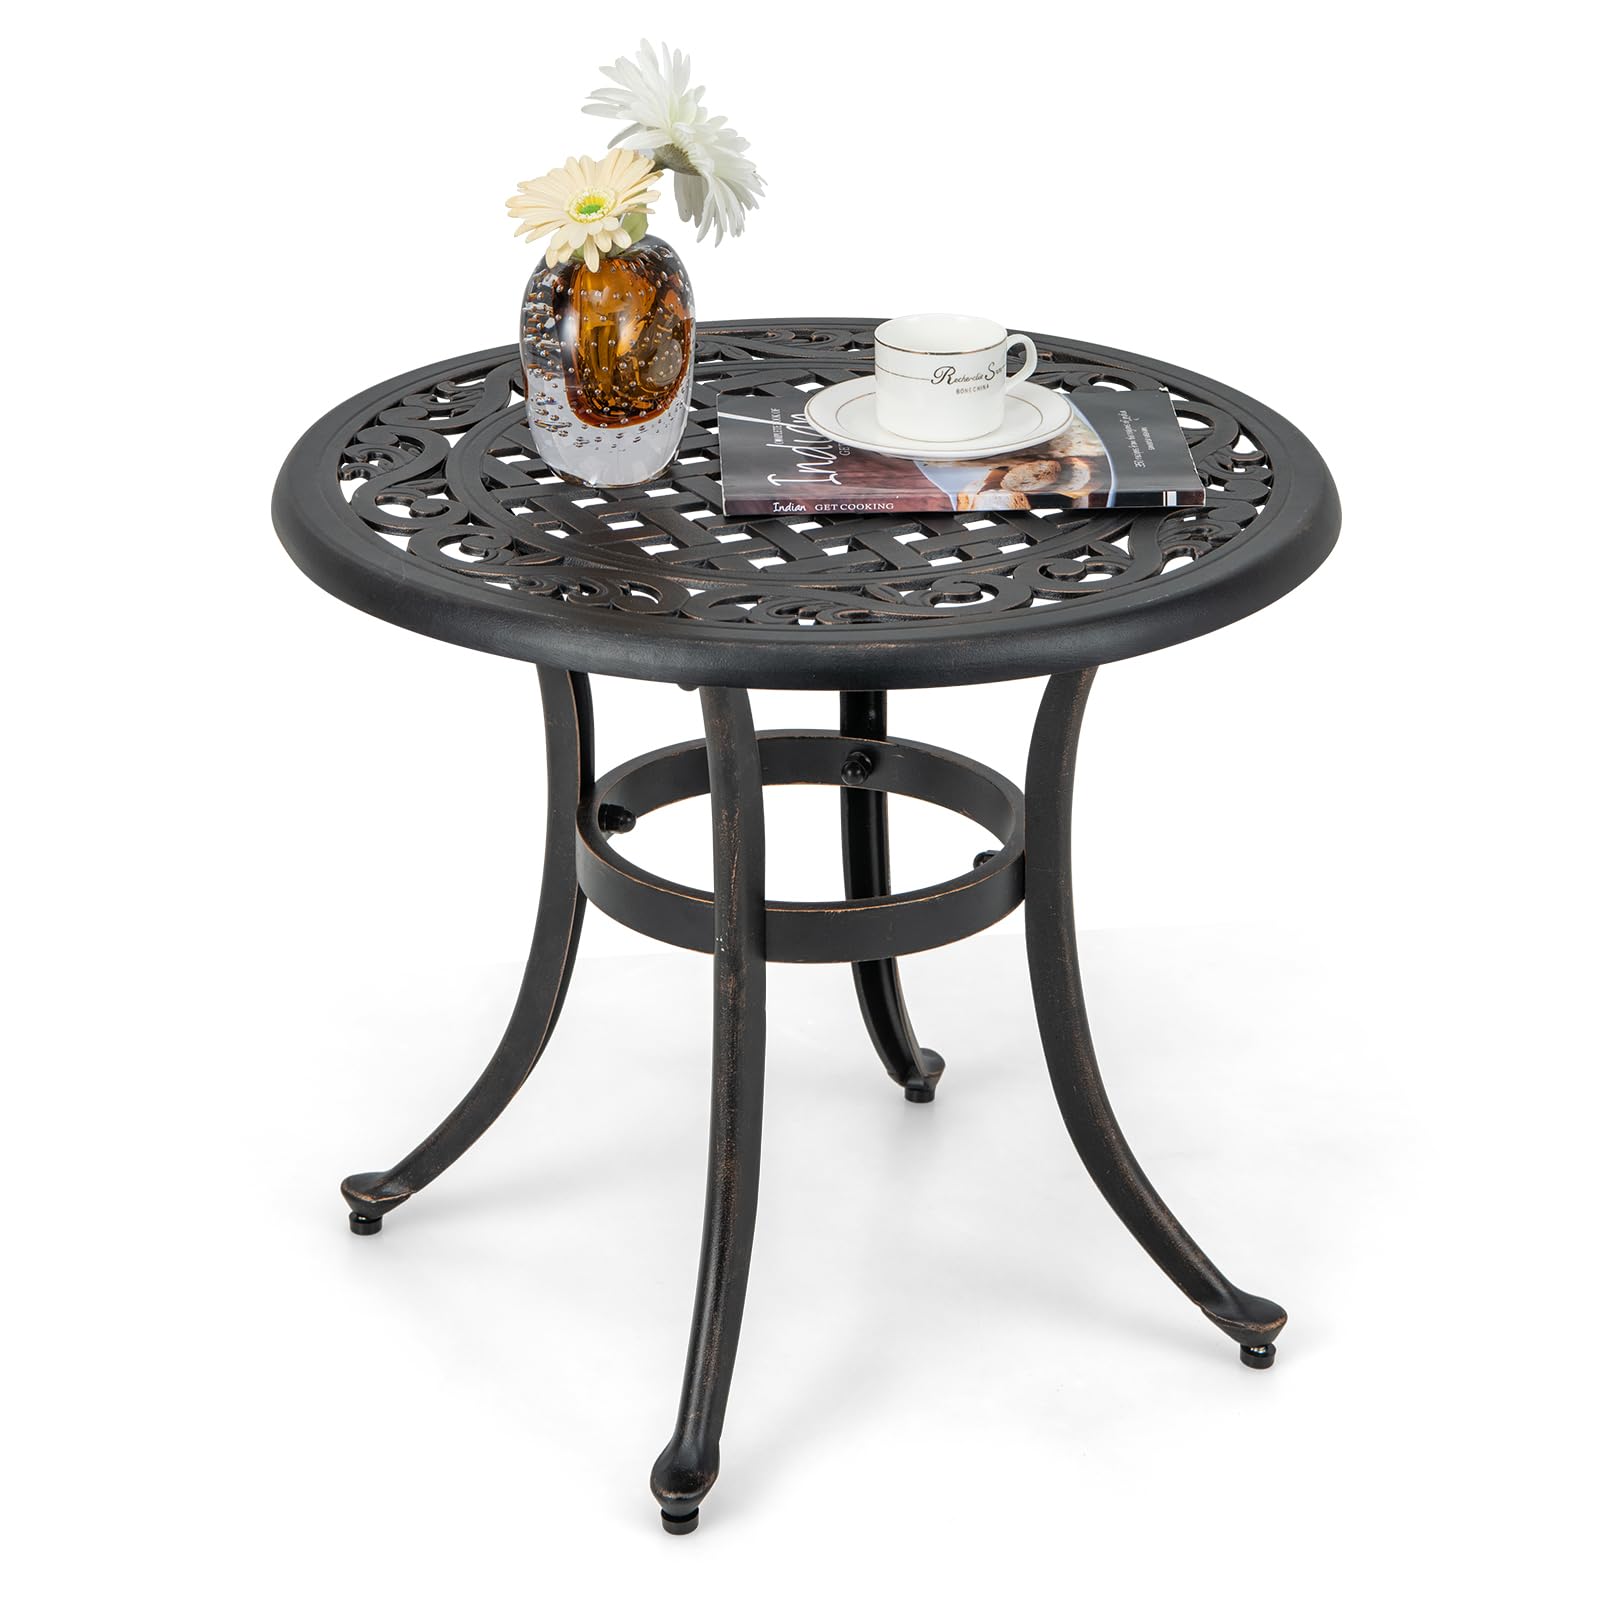 Giantex Patio Bistro Table, 24” Cast Aluminum Round Side Table, Outdoor Coffee Table for Porch, Pool, Backyard, Garden, Balcony